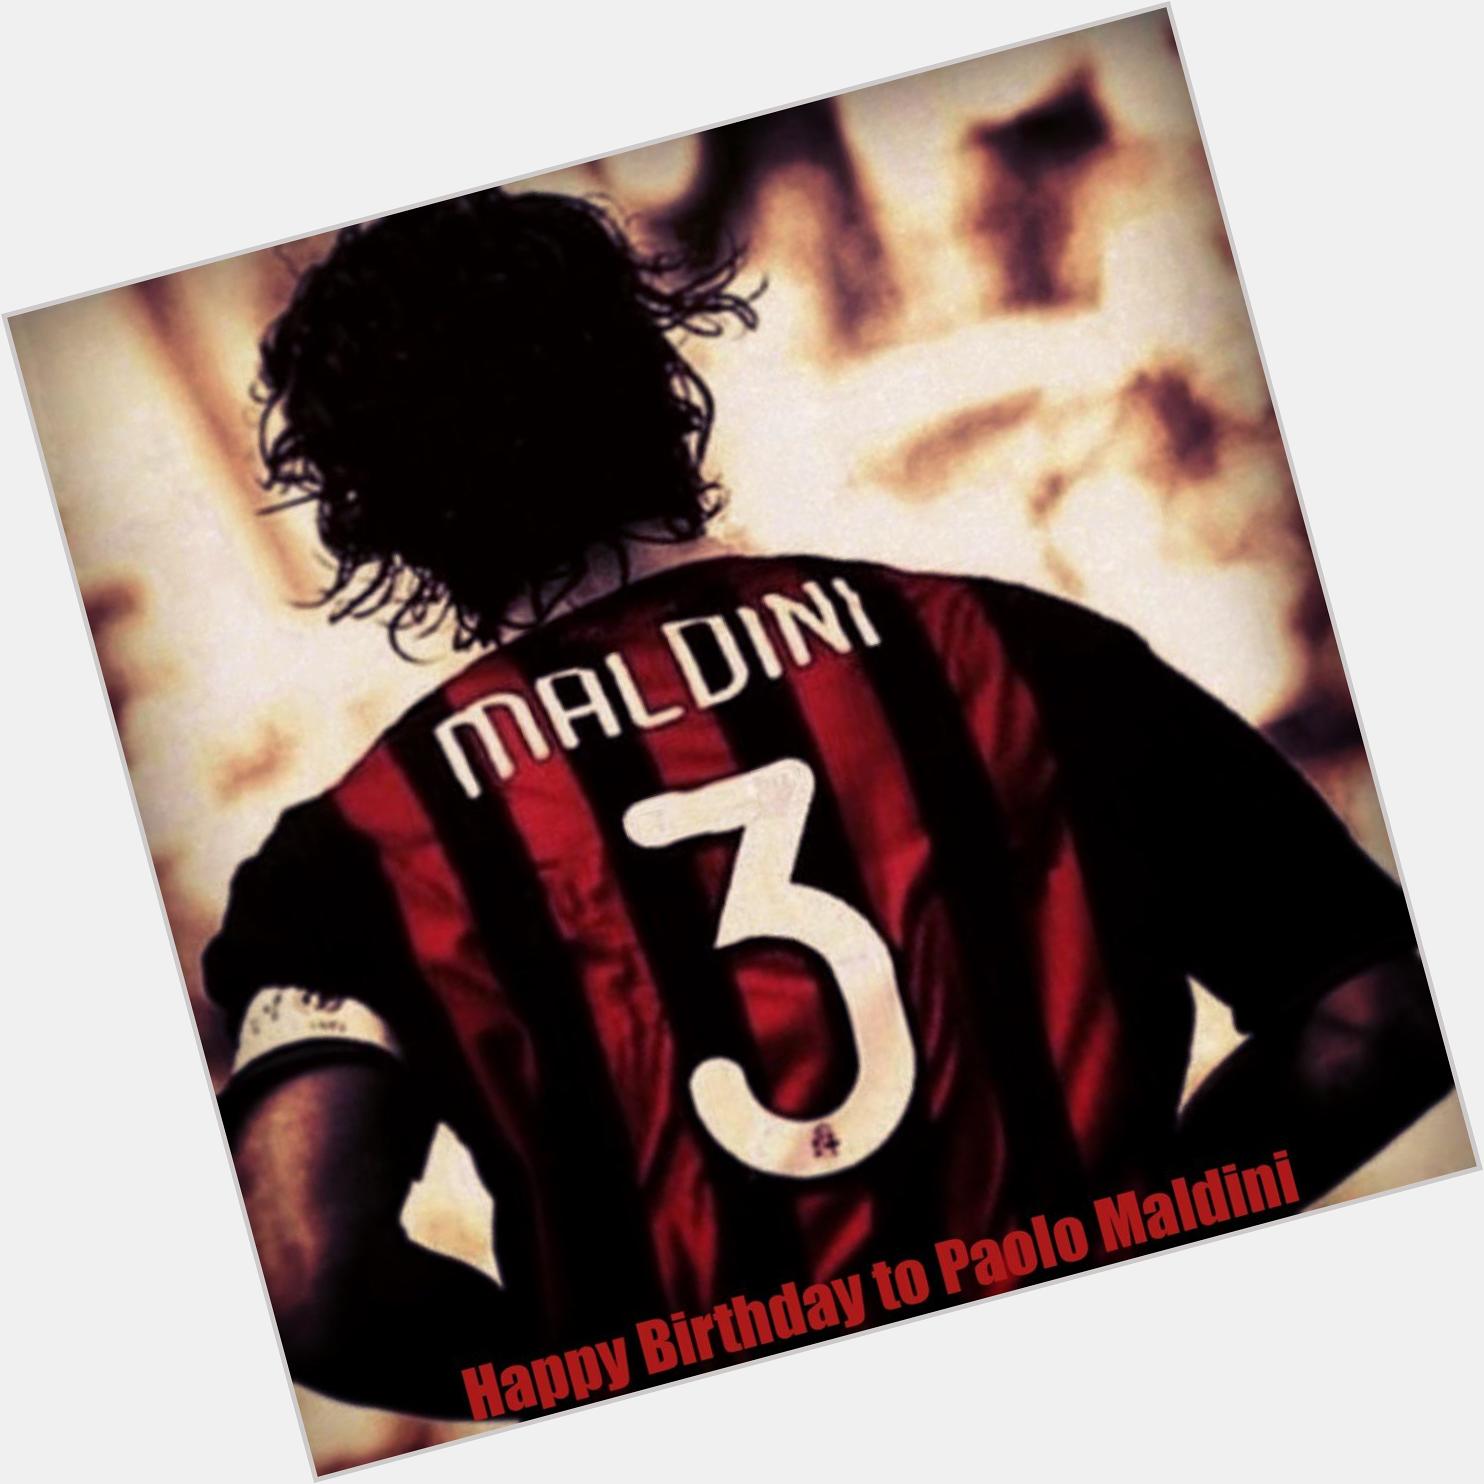 Happy Birthday to Paolo Maldini                                        